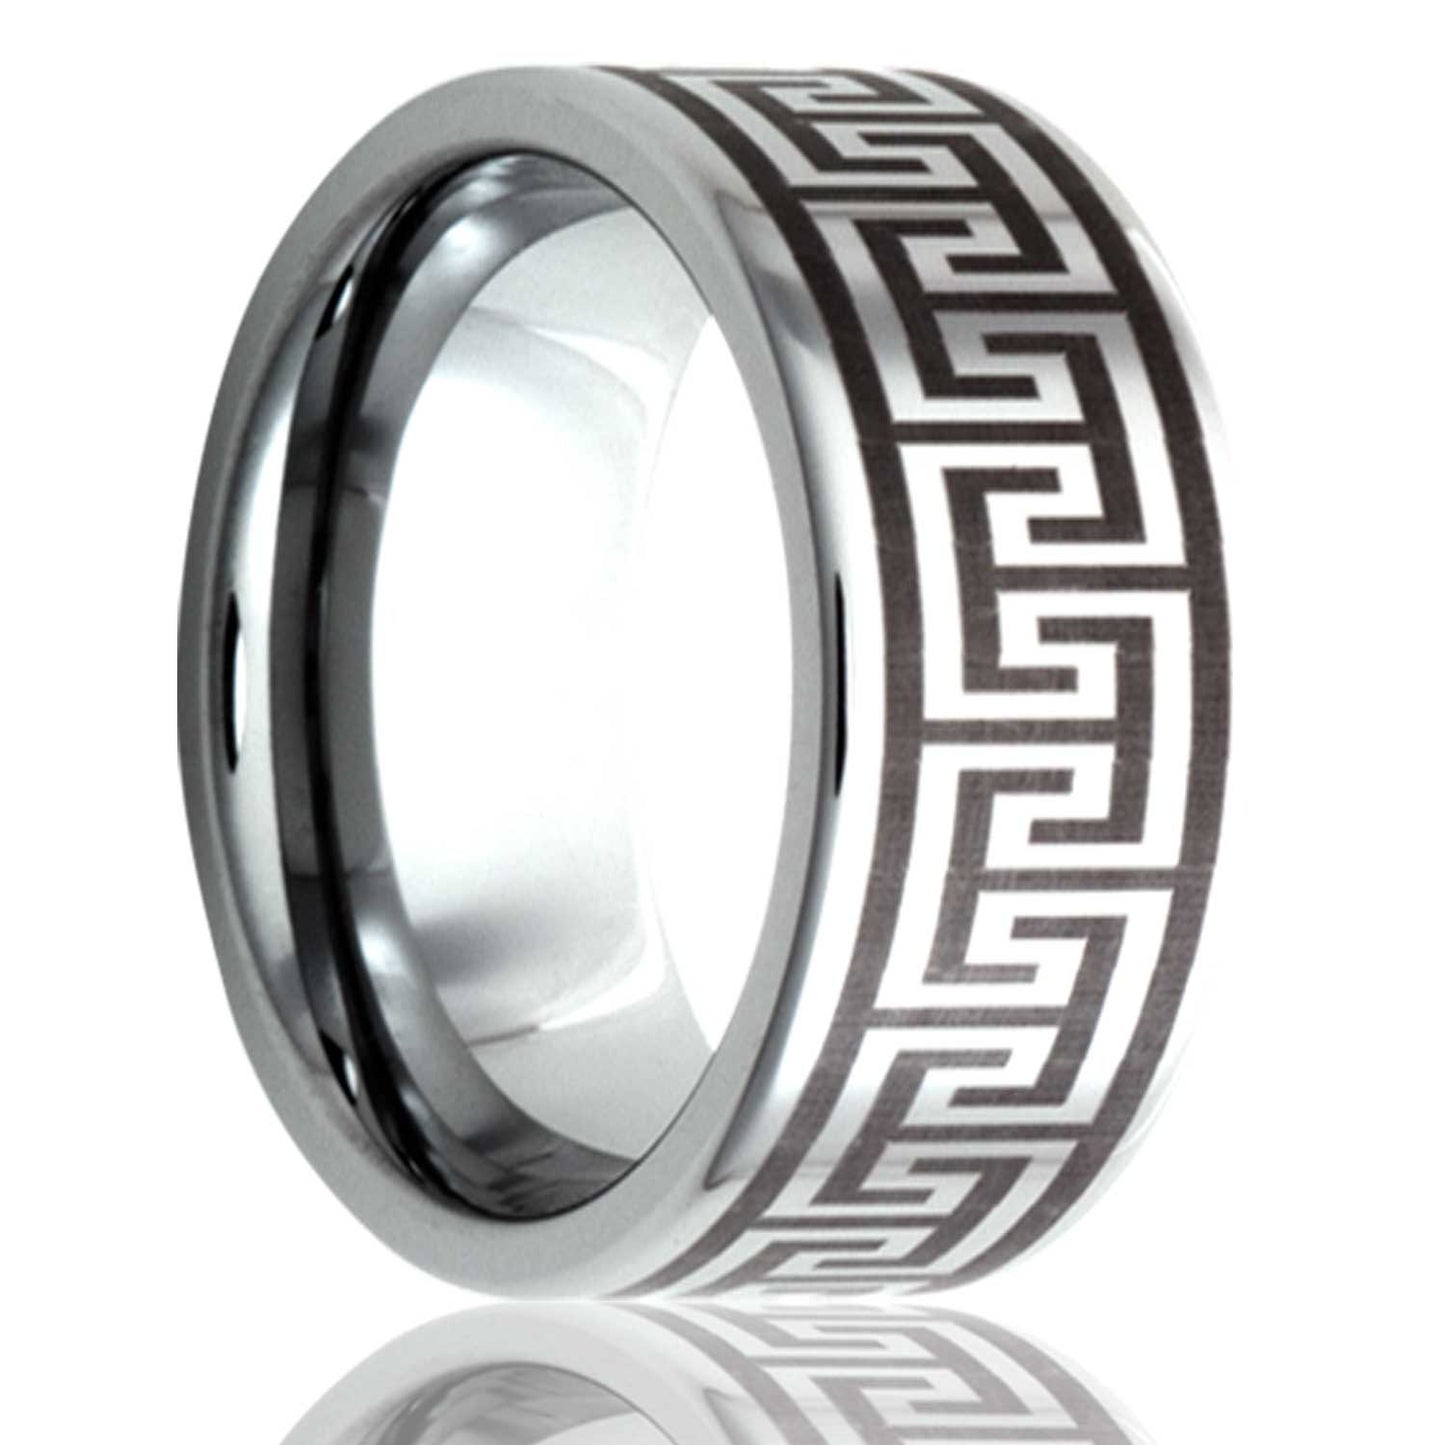 A greek key engraved titanium wedding band displayed on a neutral white background.